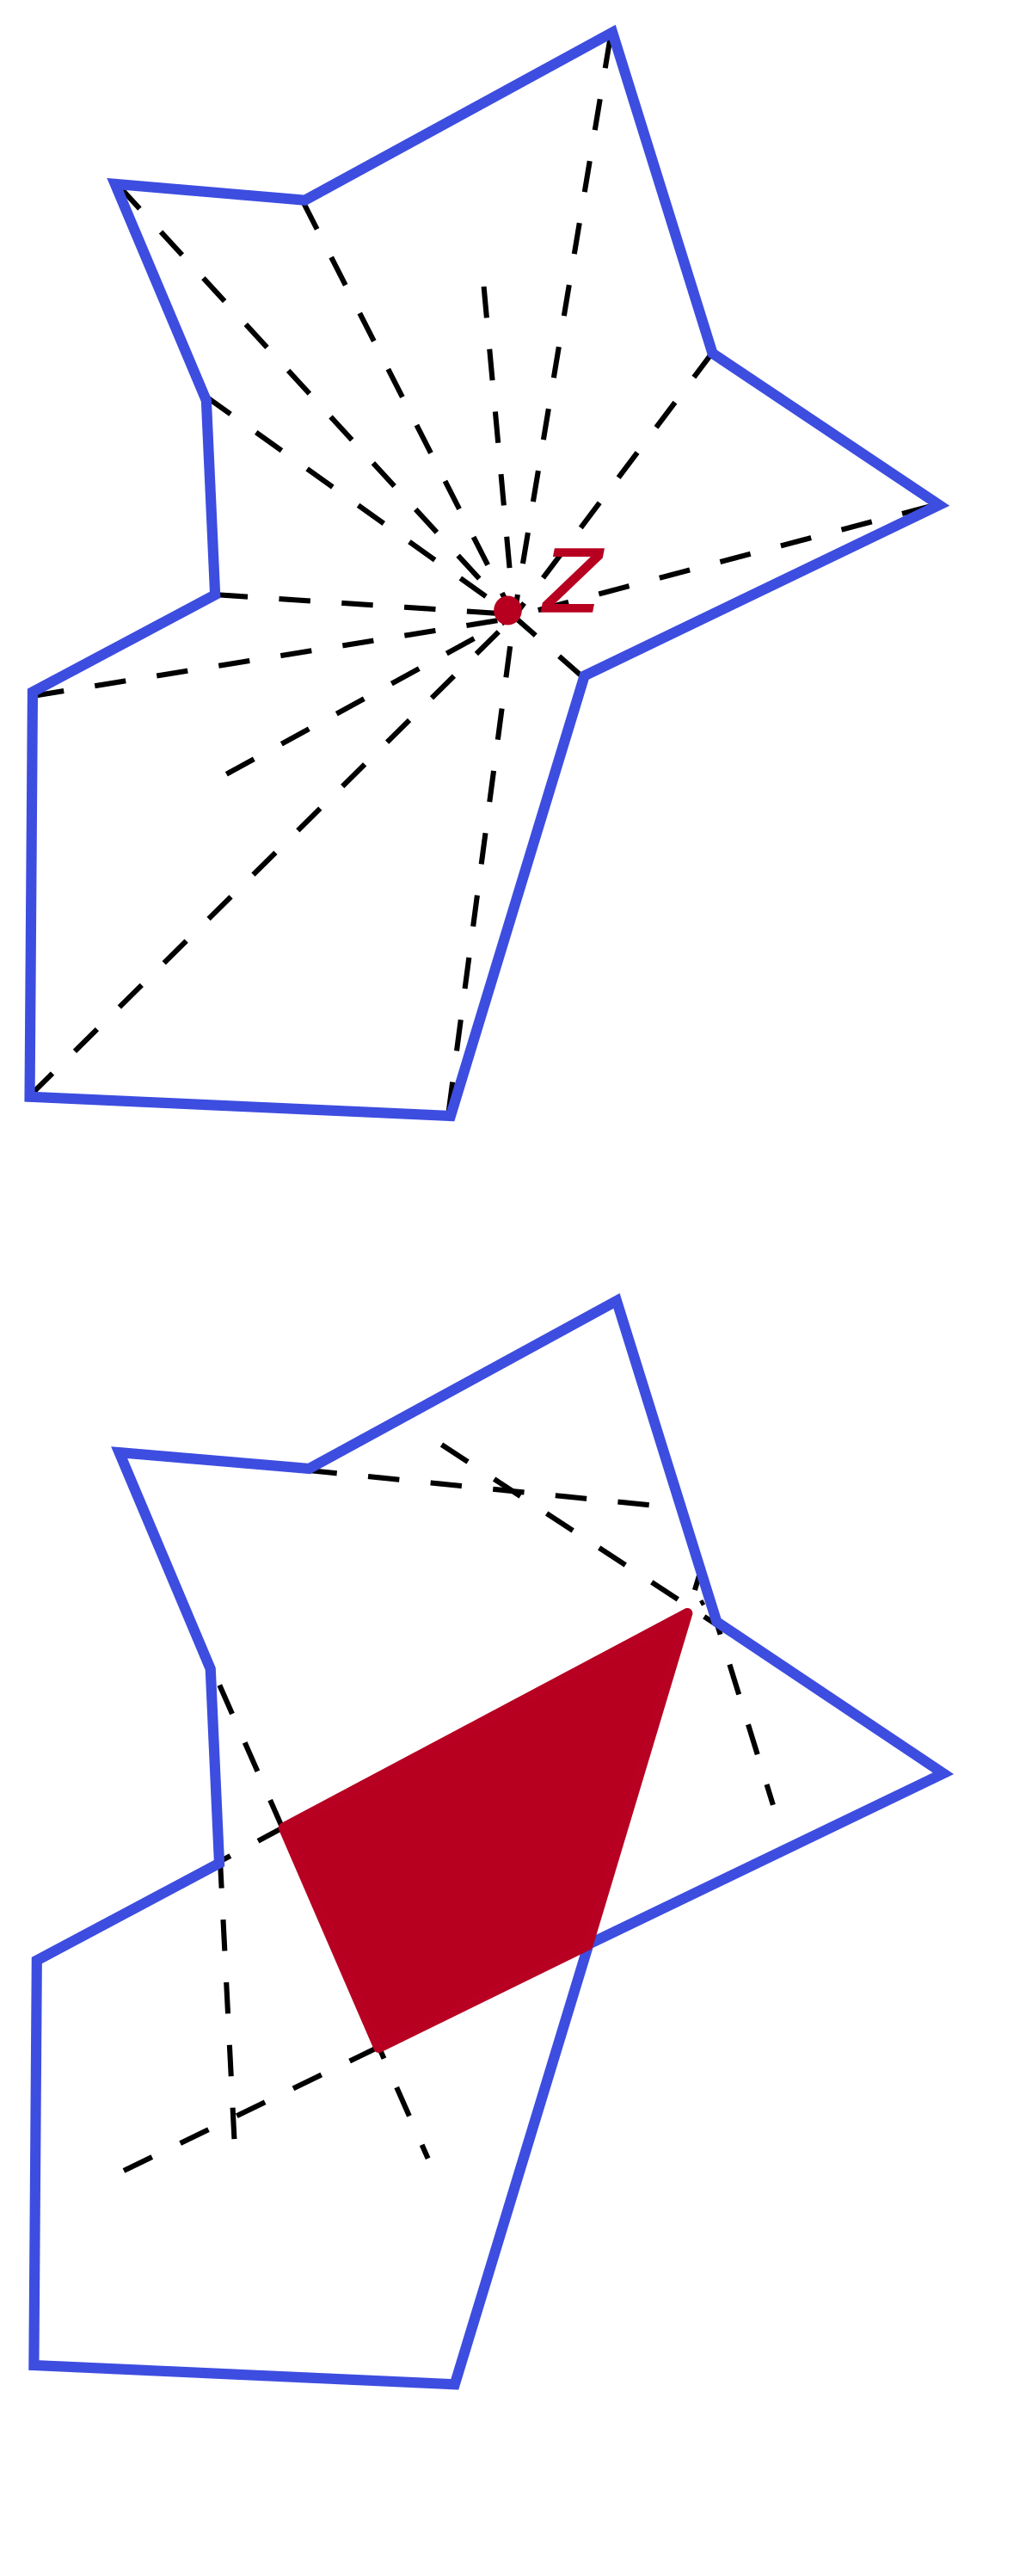 Polygon (website) - Wikipedia